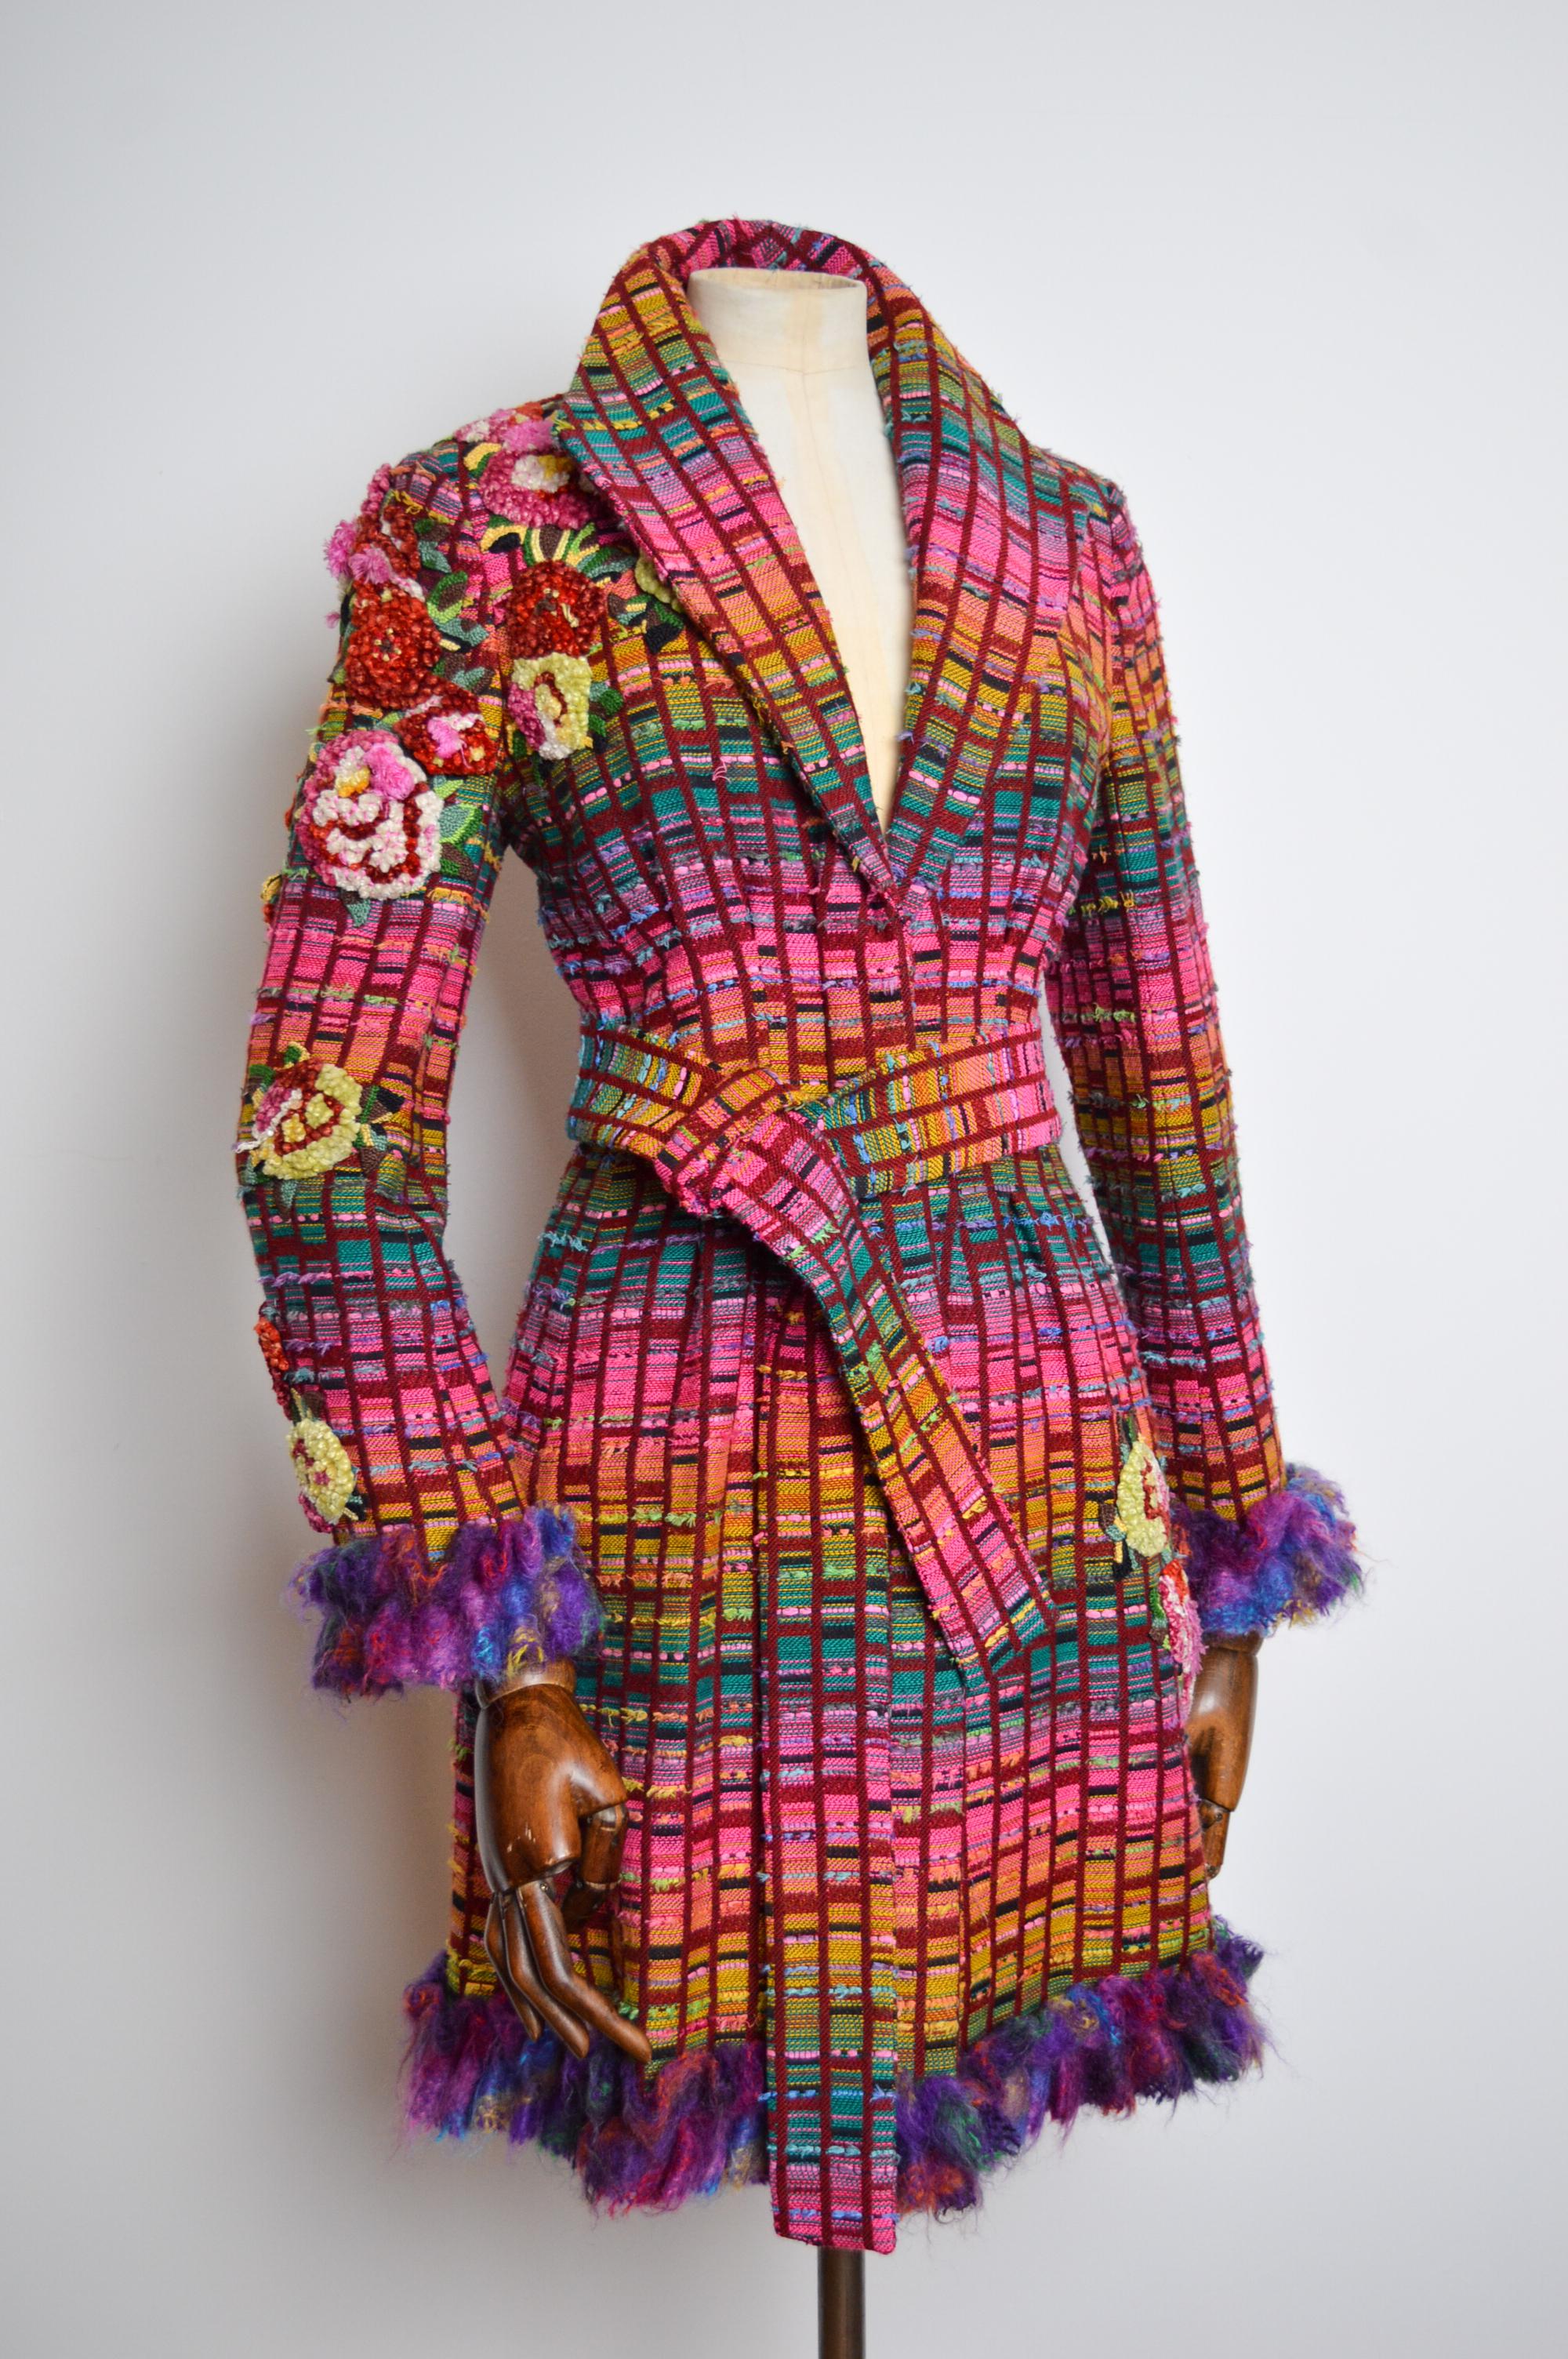 Superb Tweed Mathew Williamson Jewel Tone Embroidered Embellished Coat 9